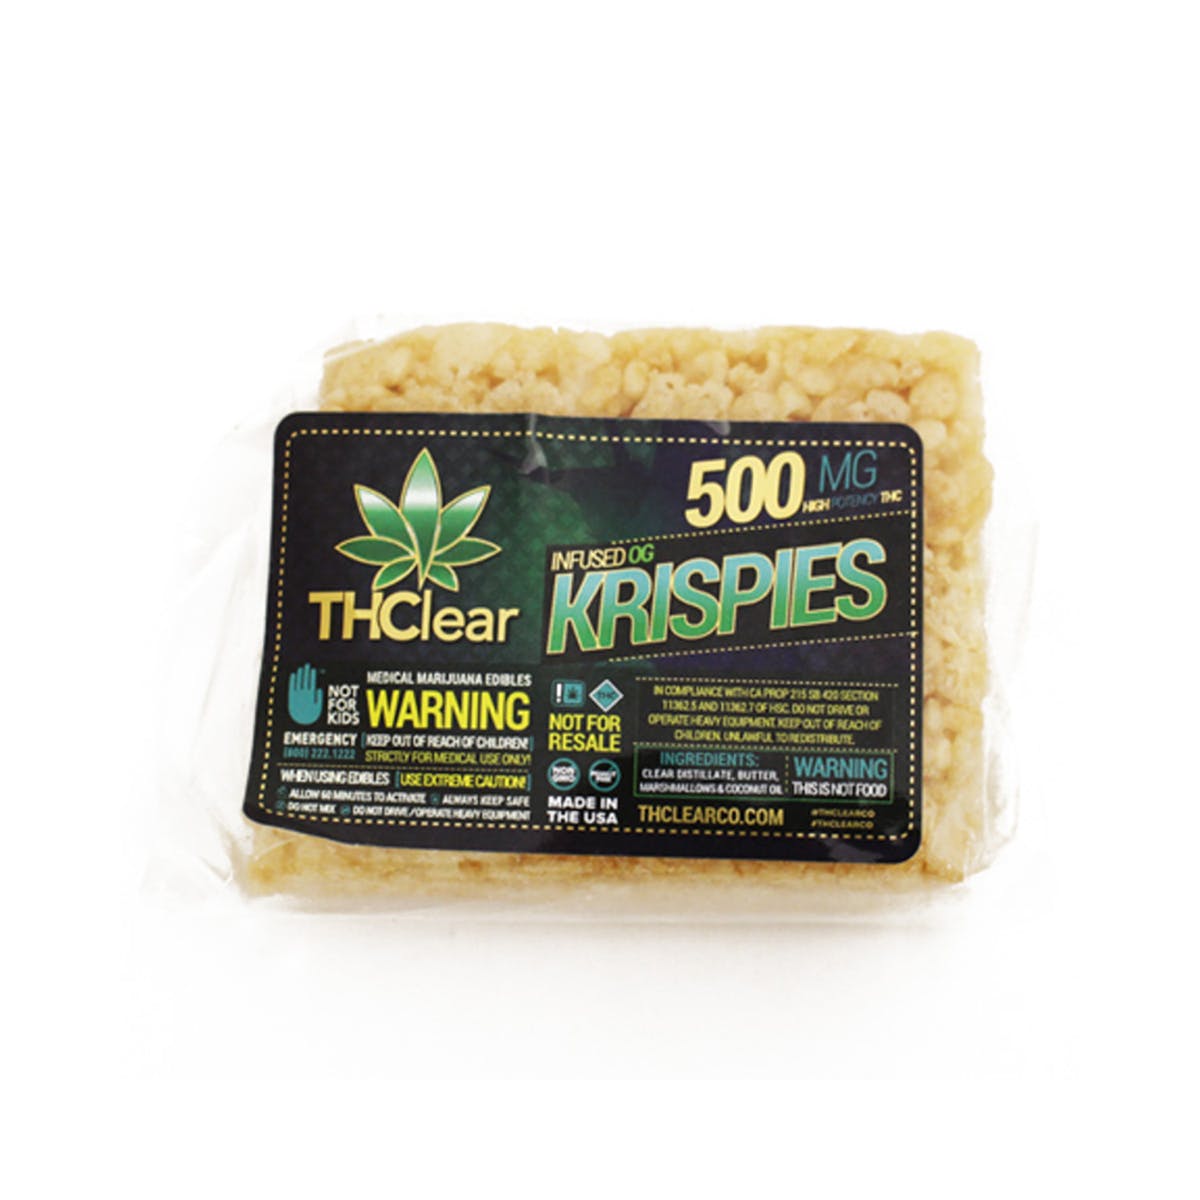 marijuana-dispensaries-puff-bar-25-cap-in-anaheim-og-krispies-cereal-bar-500mg